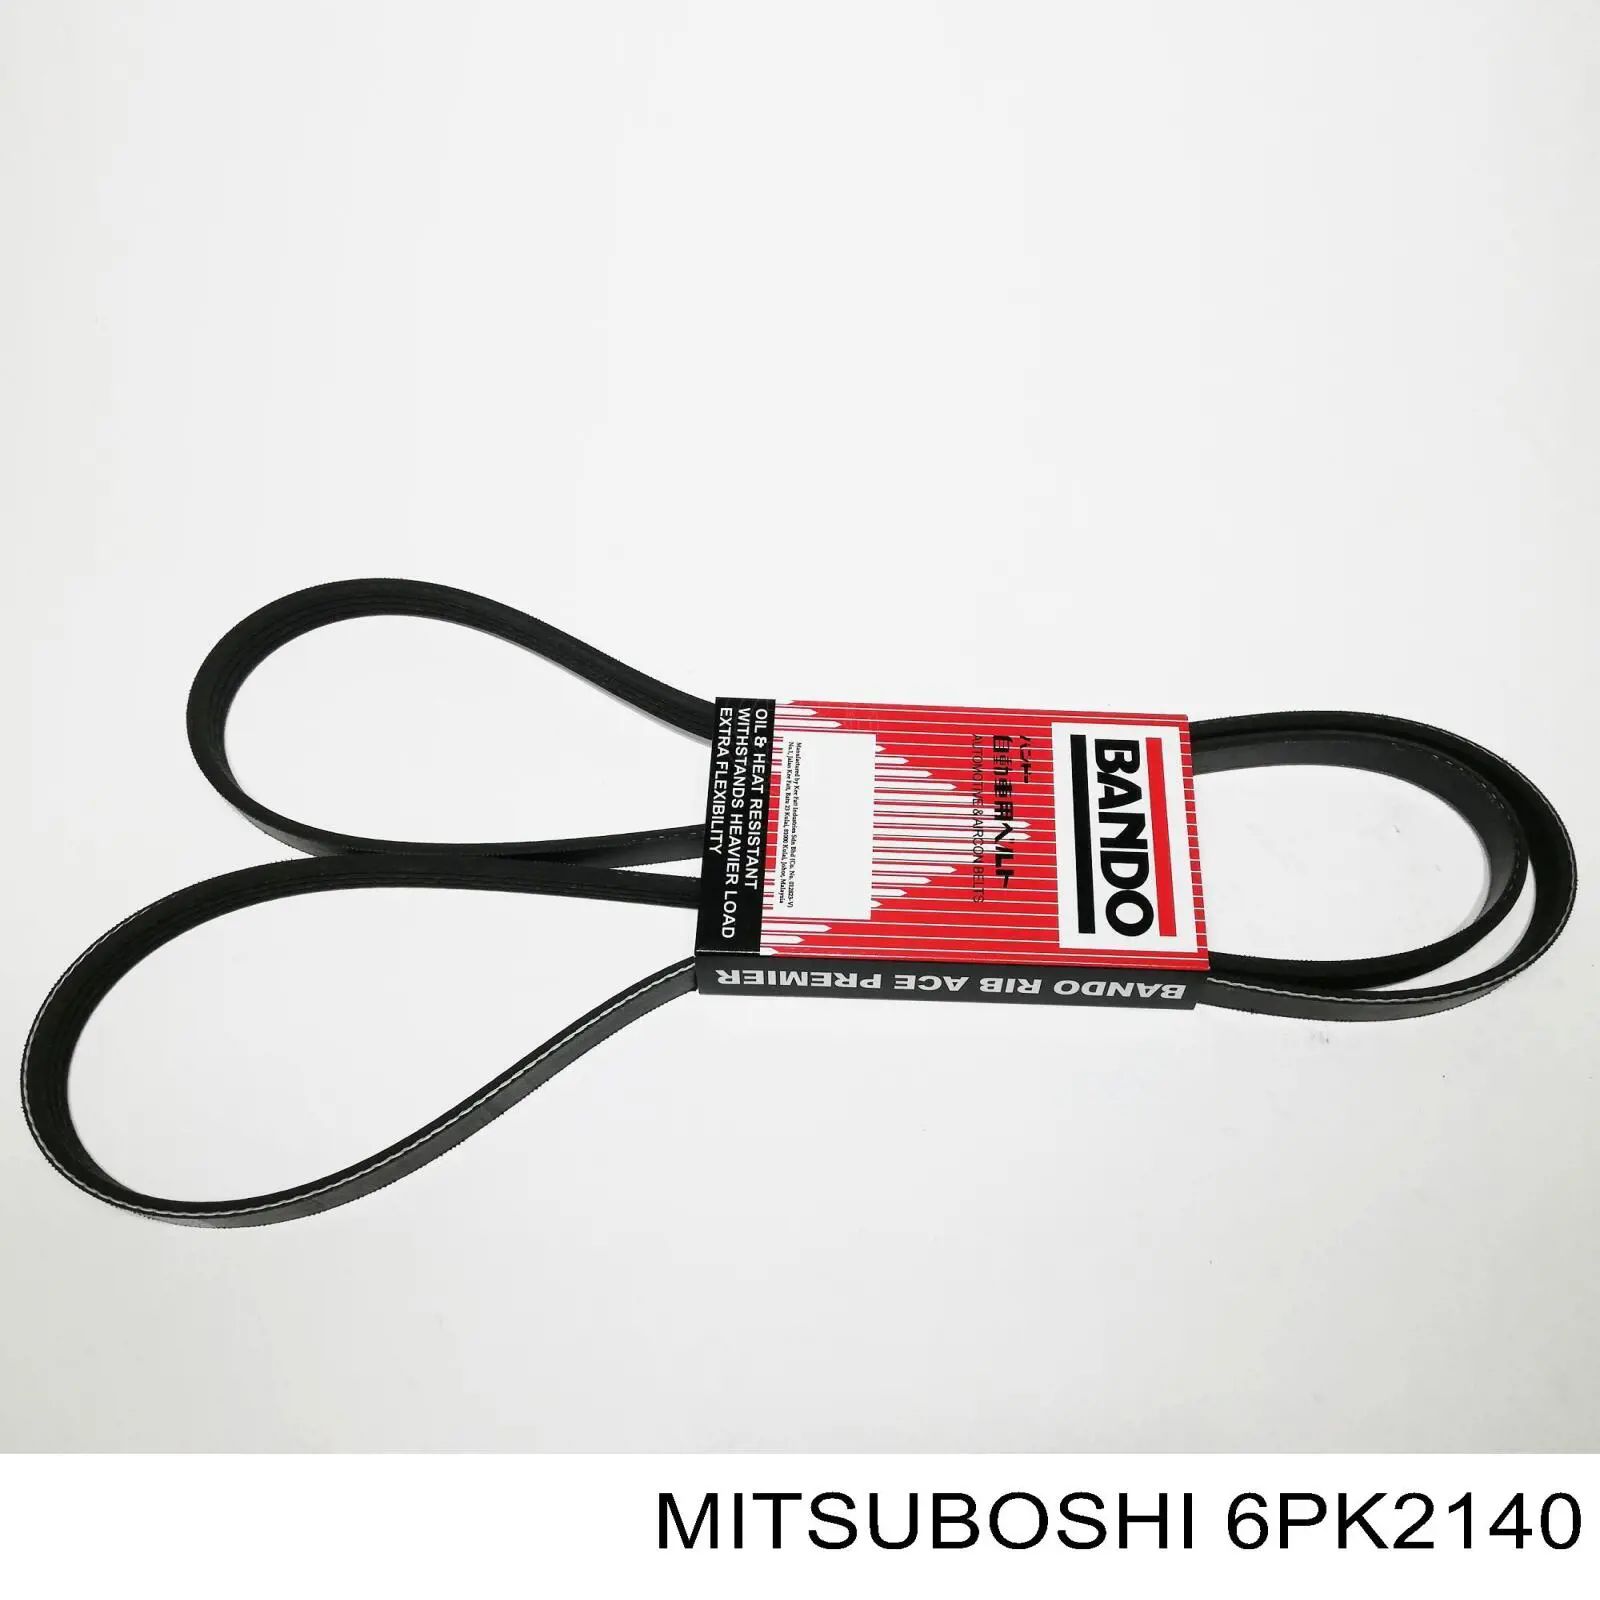 6PK2140 Mitsuboshi ремень генератора